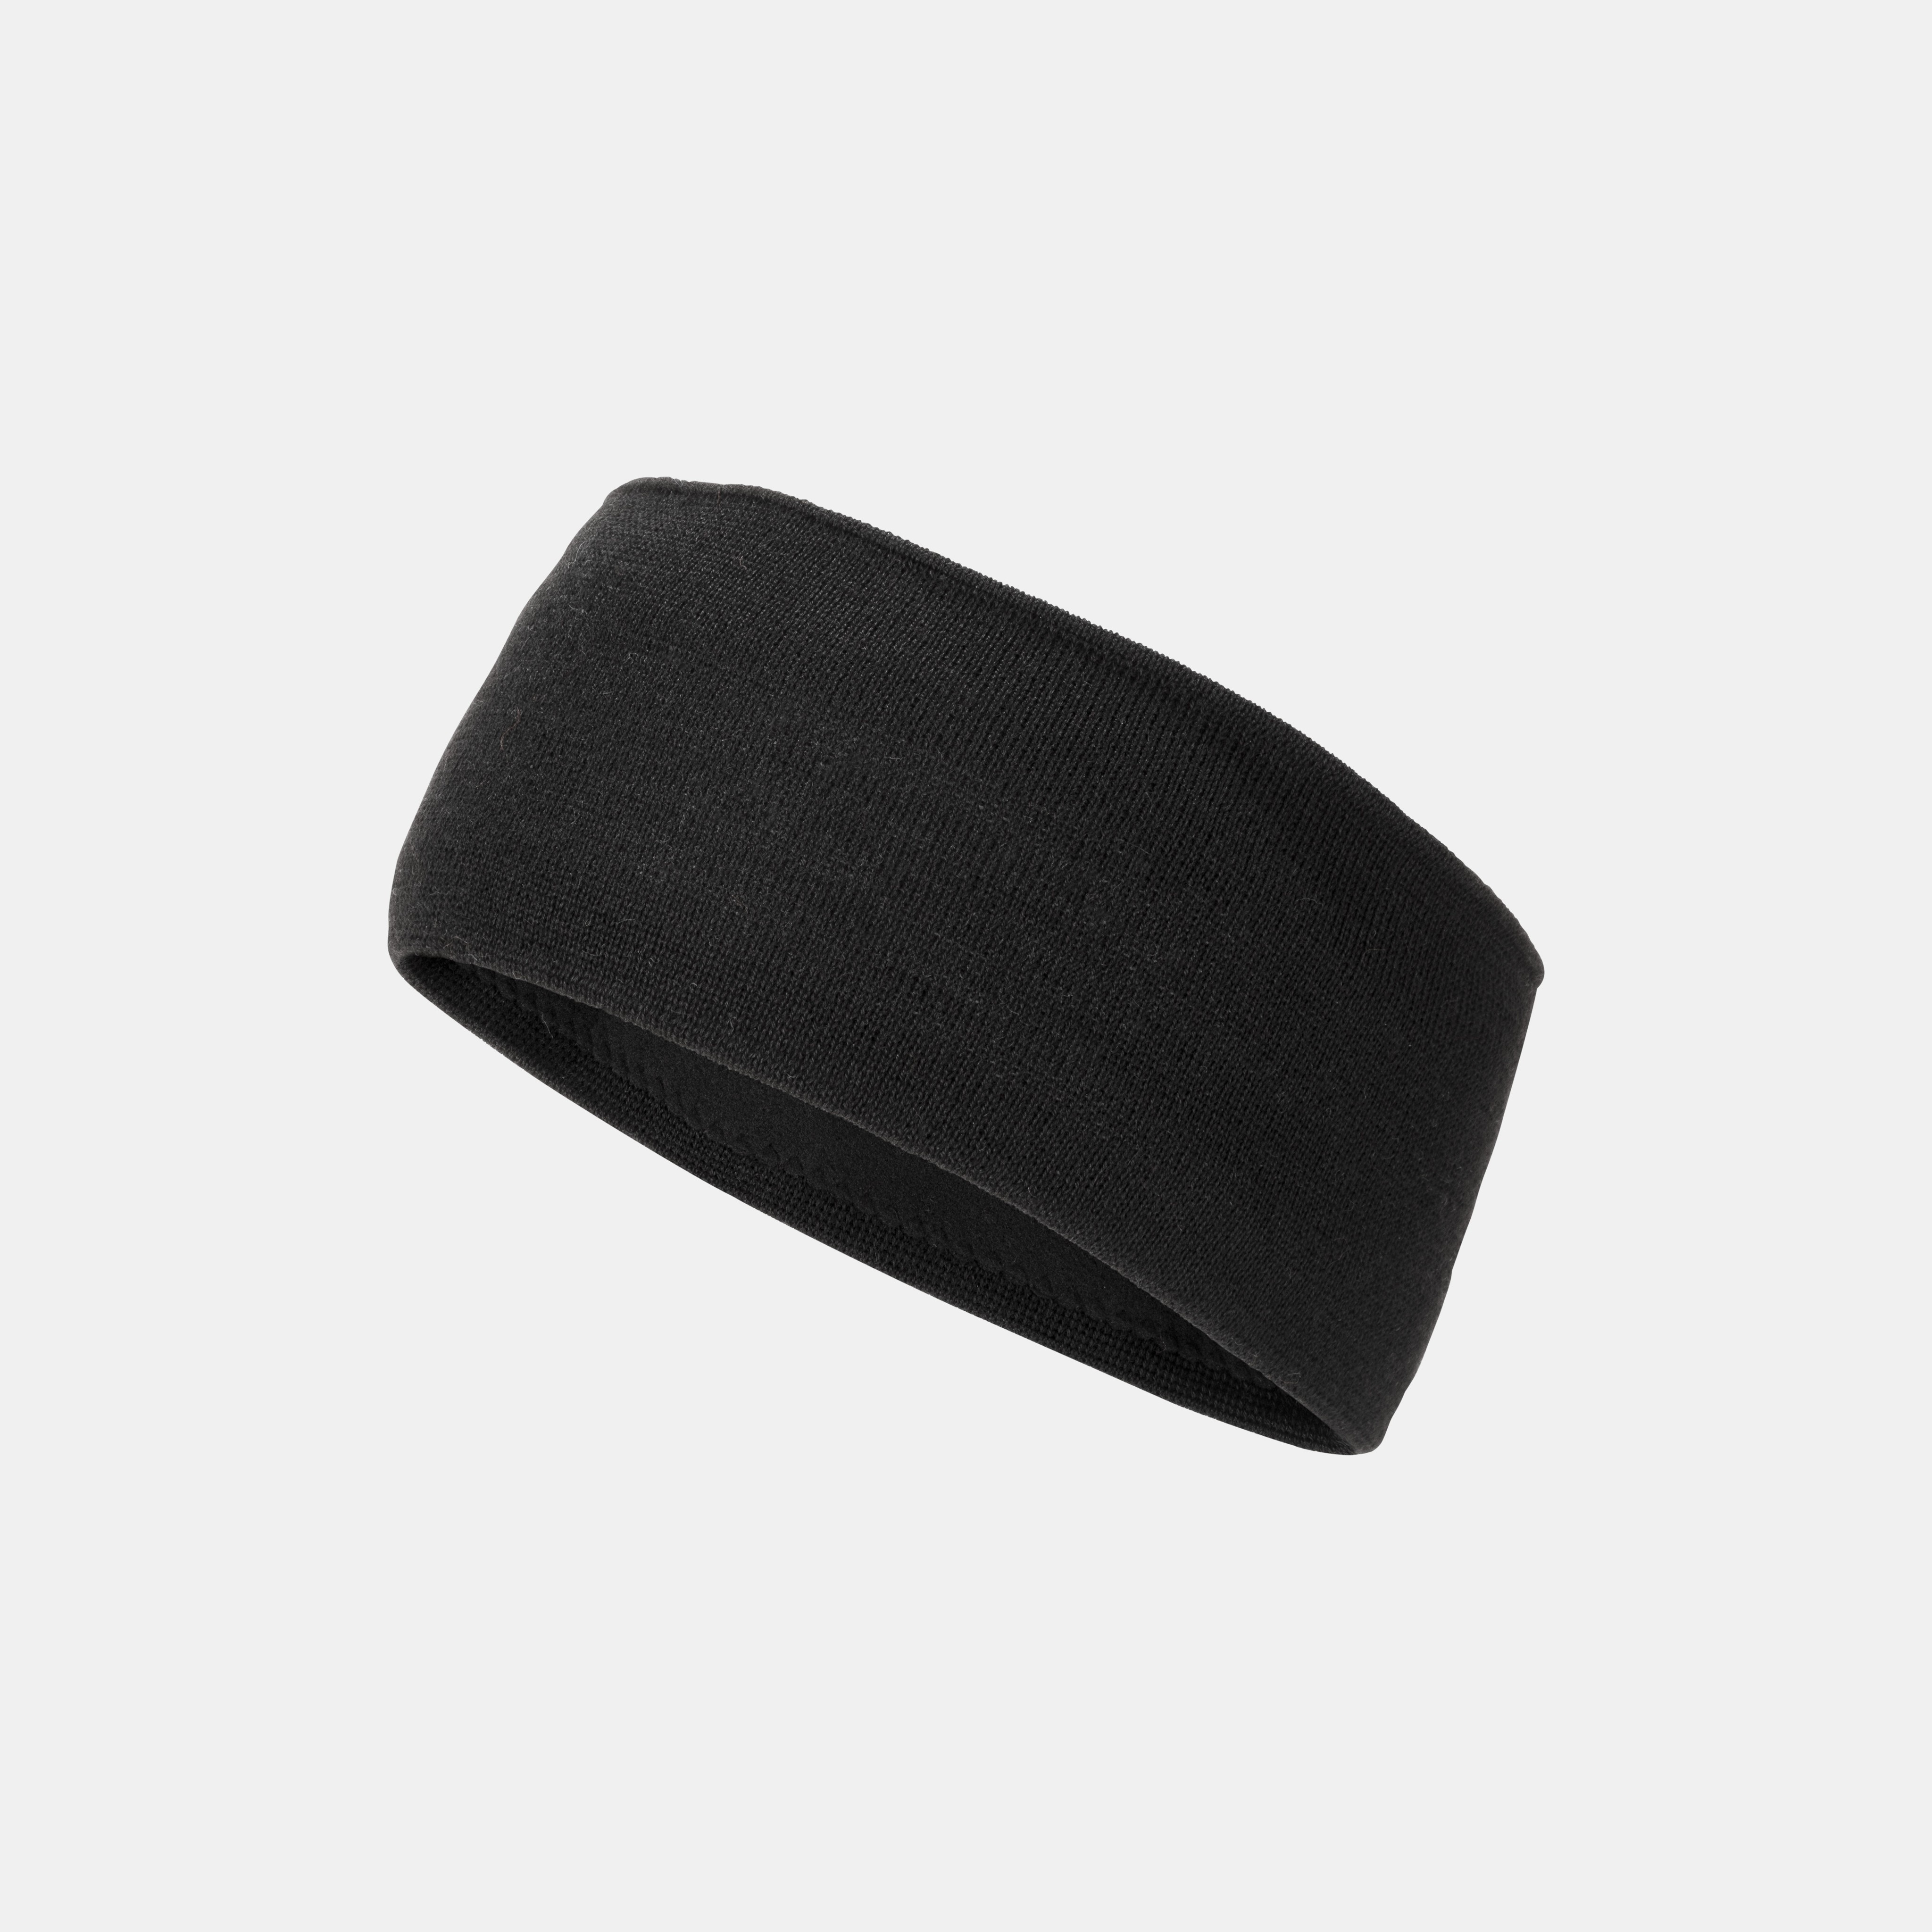 Tweak Headband product image